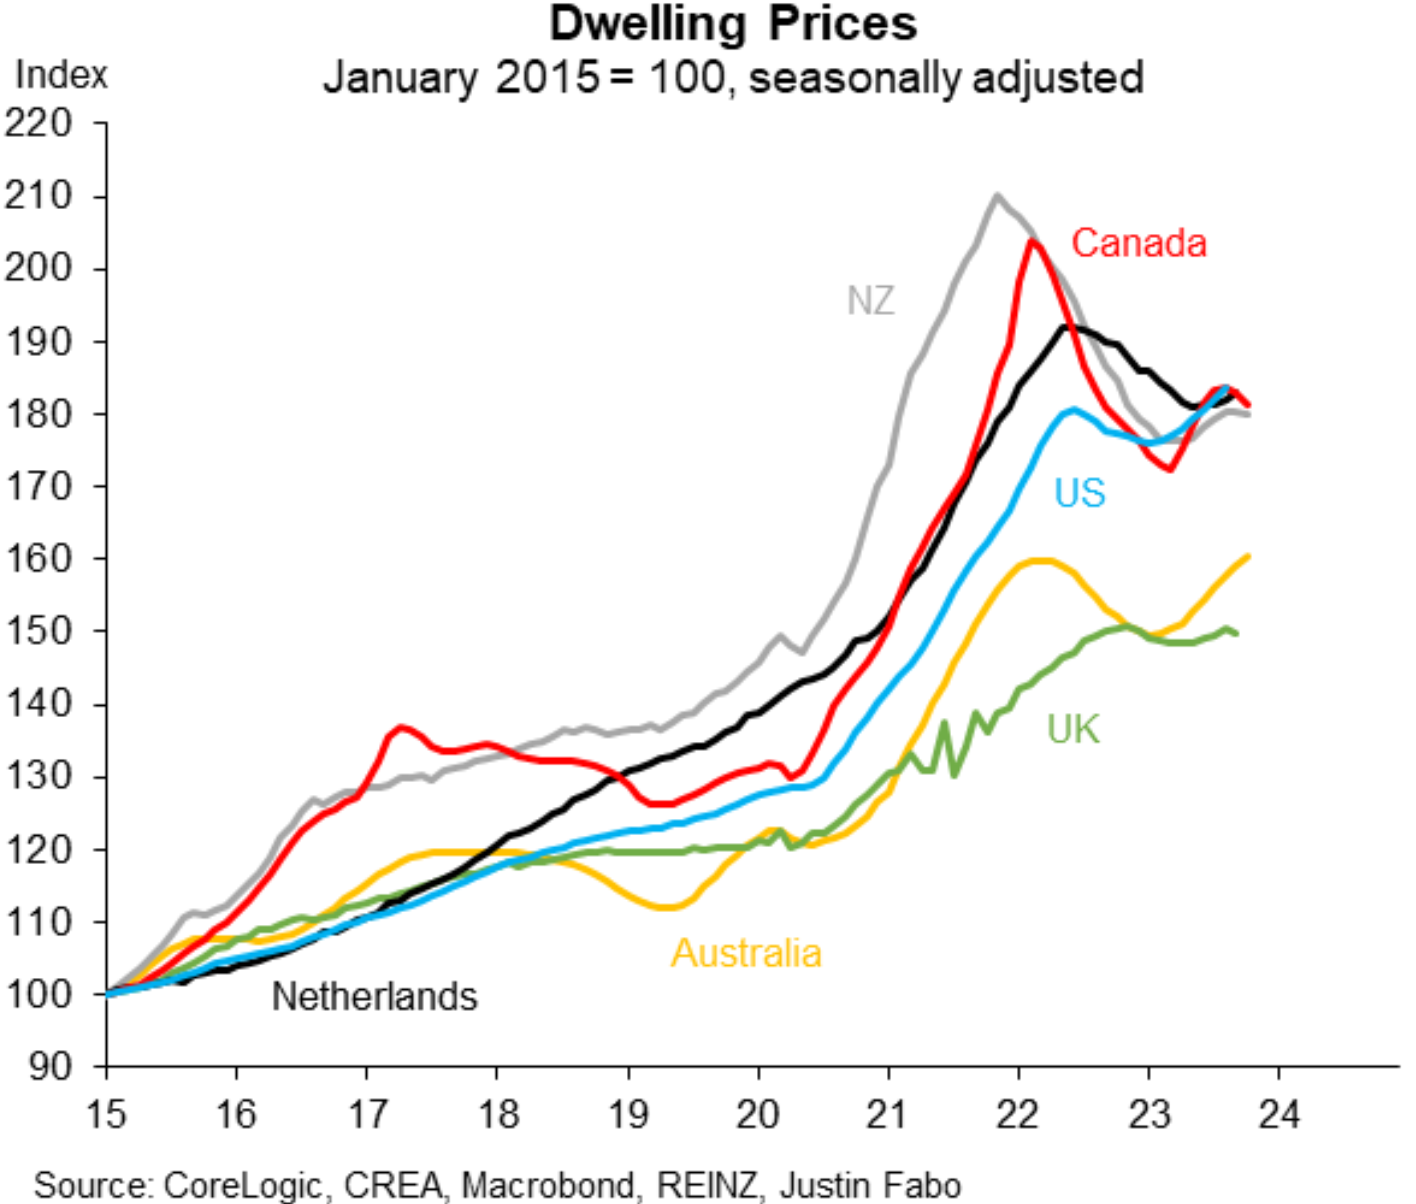 Global dwelling prices